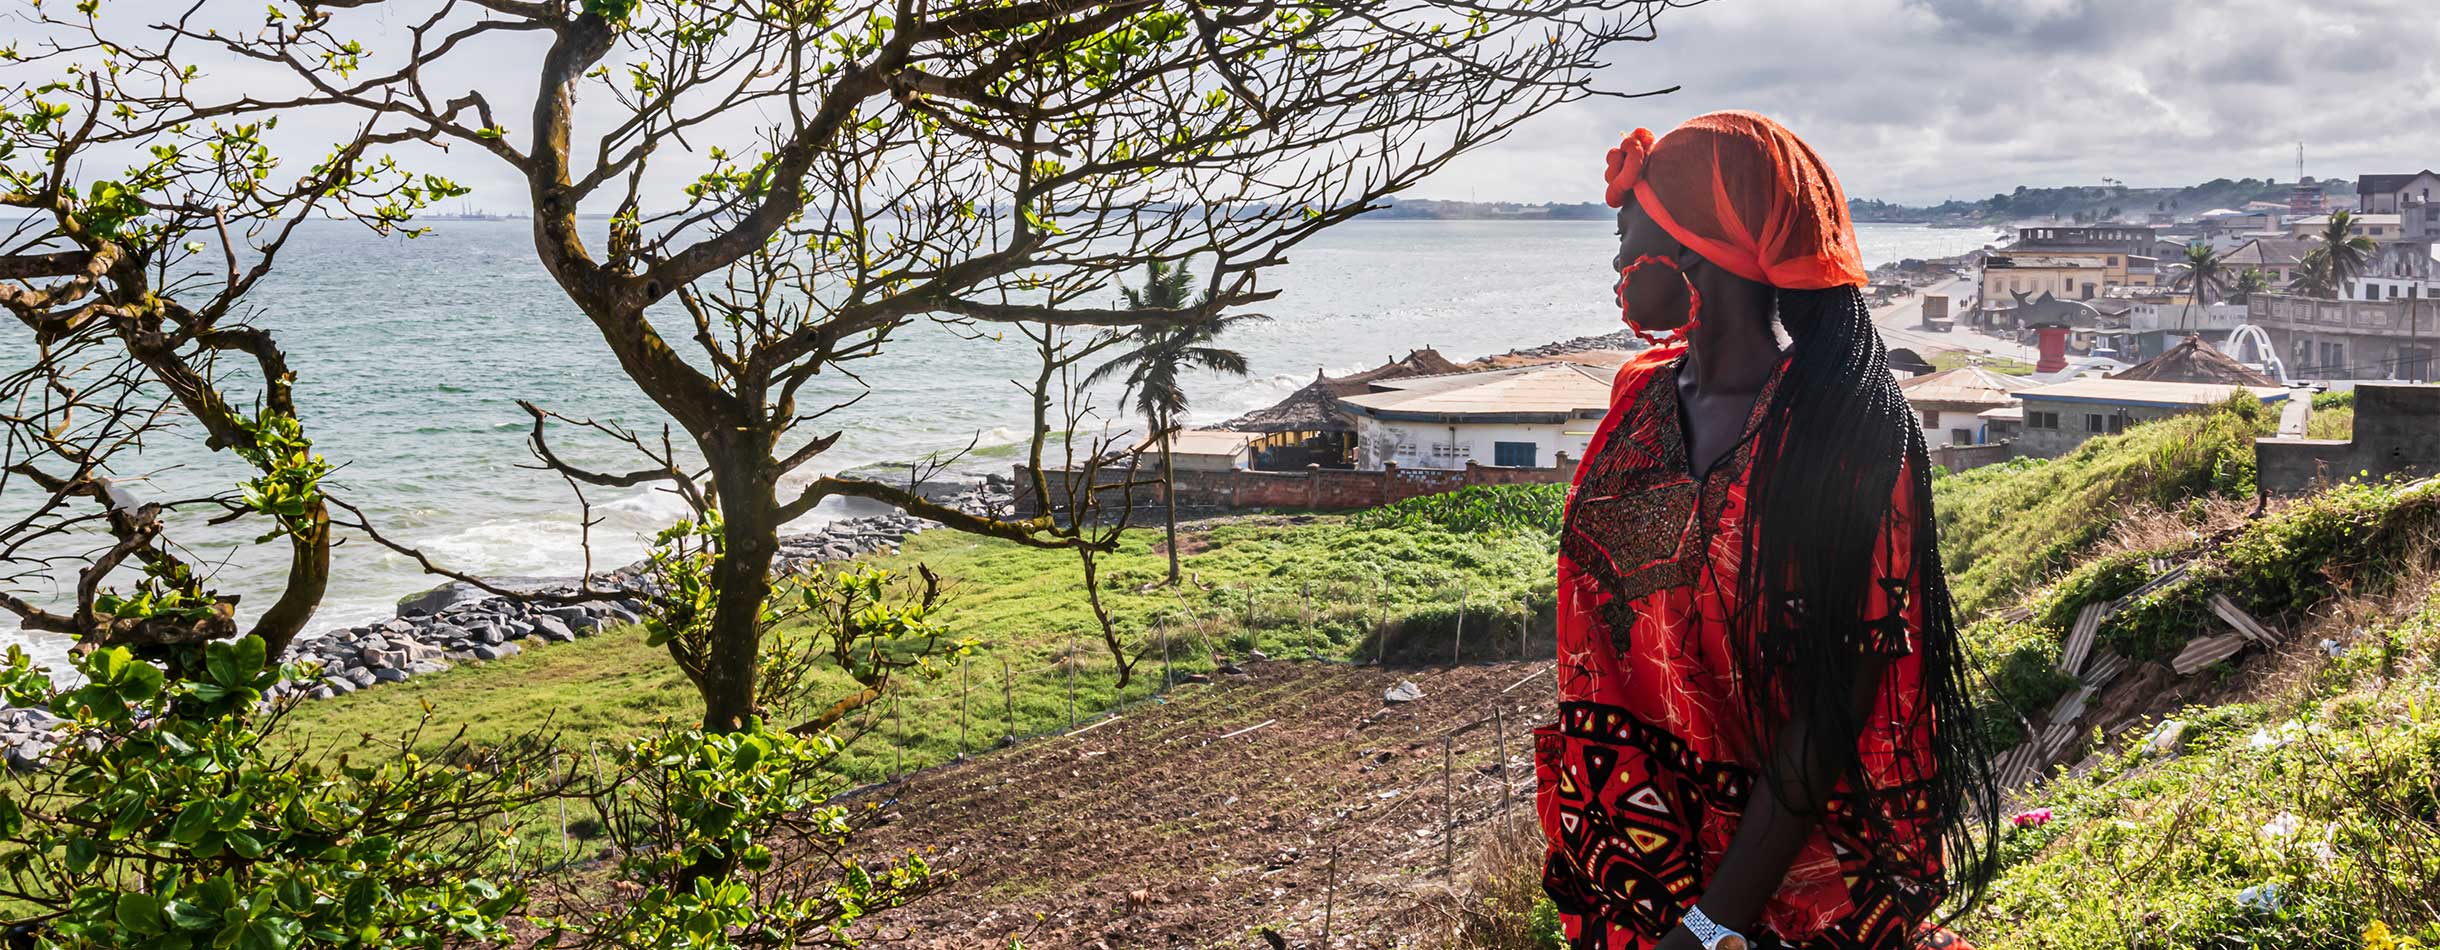 African woman looks out over the sea in Sekondi-Takoradi, located in Ghana